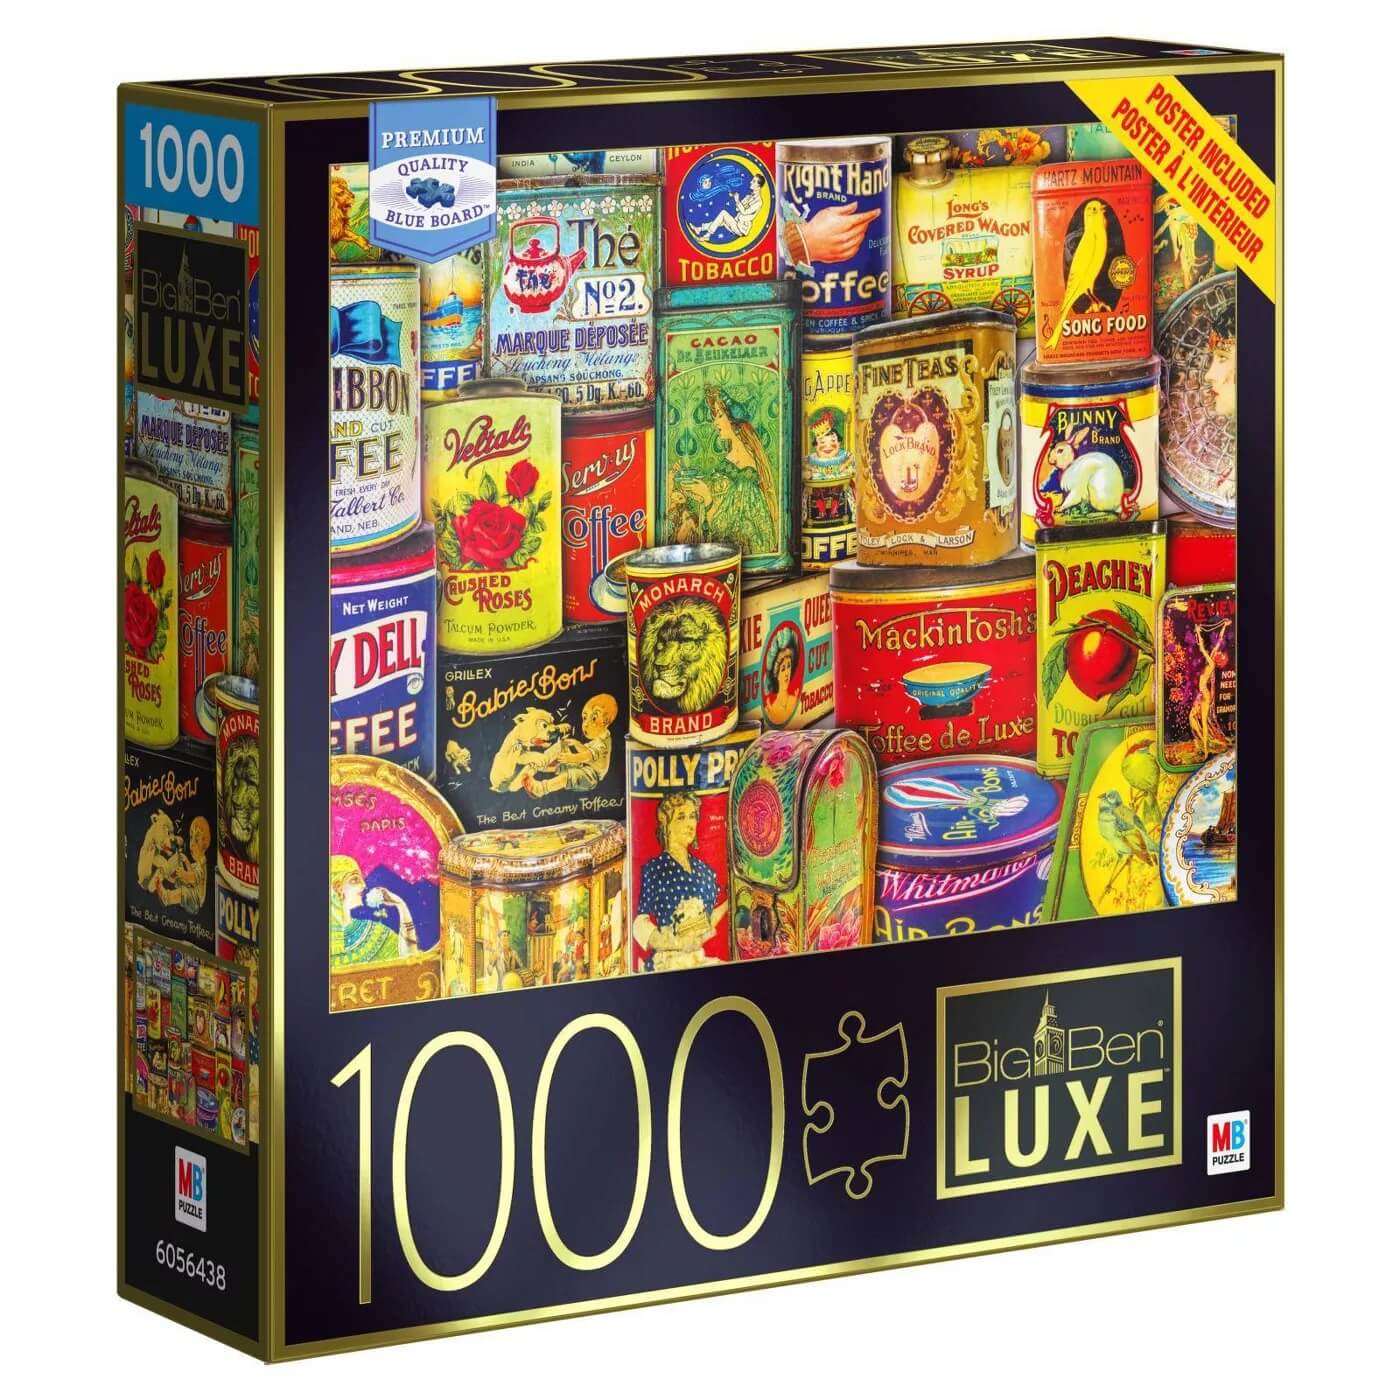 Cardinal Big Ben Luxe Antique Advertising 1000 Piece Puzzle